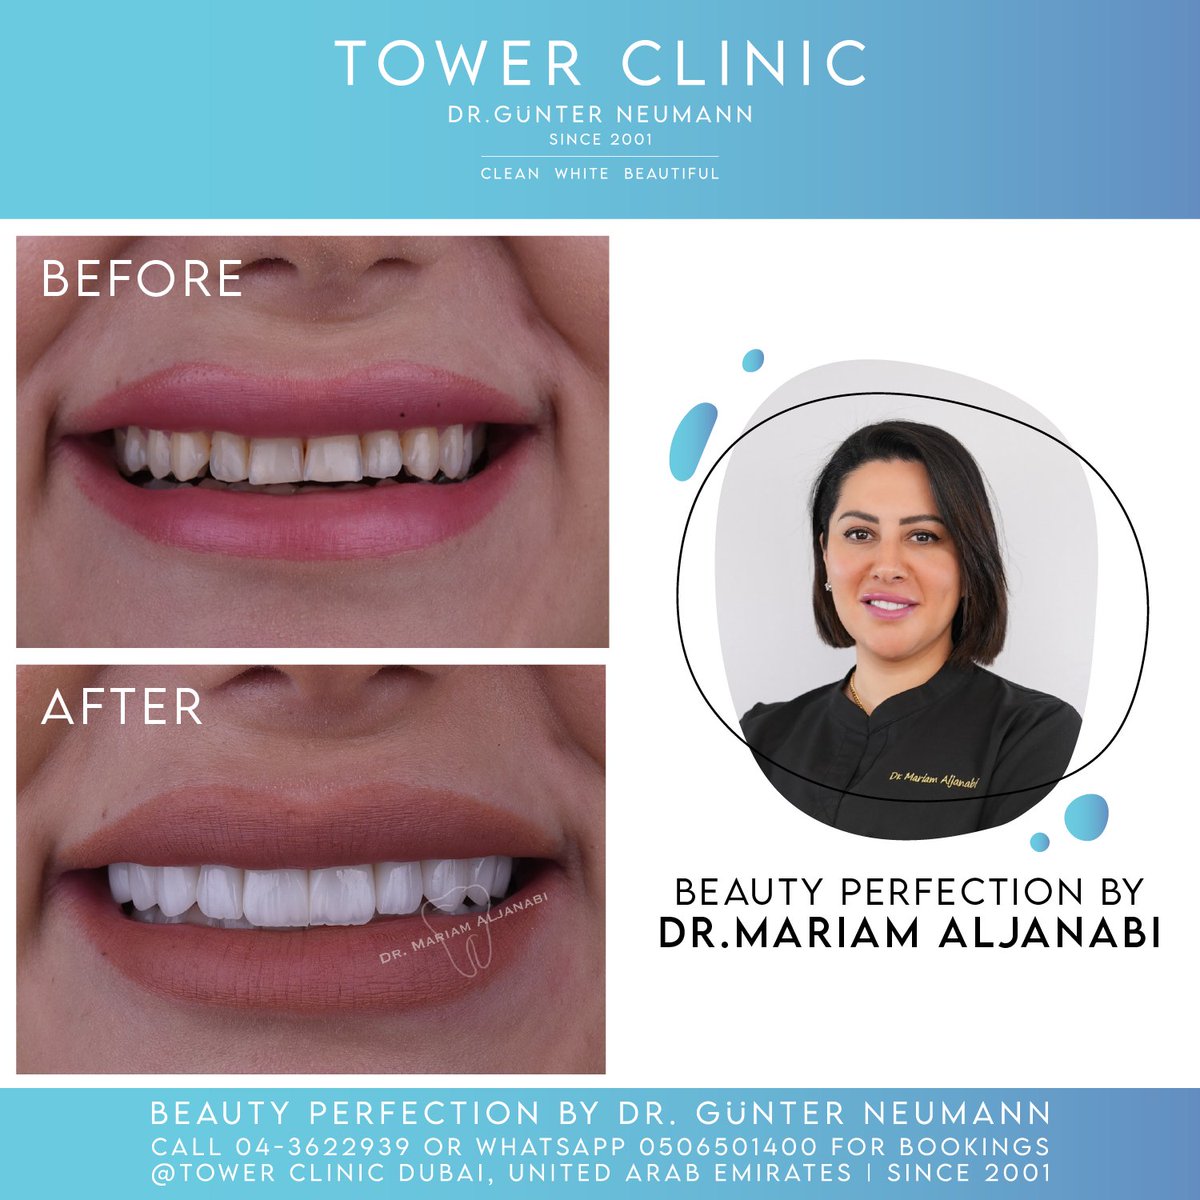 Beauty Perfection By Dr.Mariam Aljanabi ✨
Please call 04-3622939 or WhatsAPP 0506501400 for bookings.
#Dubai #Dental #Dentist #Teeth #Clinic #TowerClinic #DubaiDentist #DubaiClinic #DentalHealth #OralCare #DentistVisit #DentalCheckup #OralHygiene #TeethCleaning #DentalCare